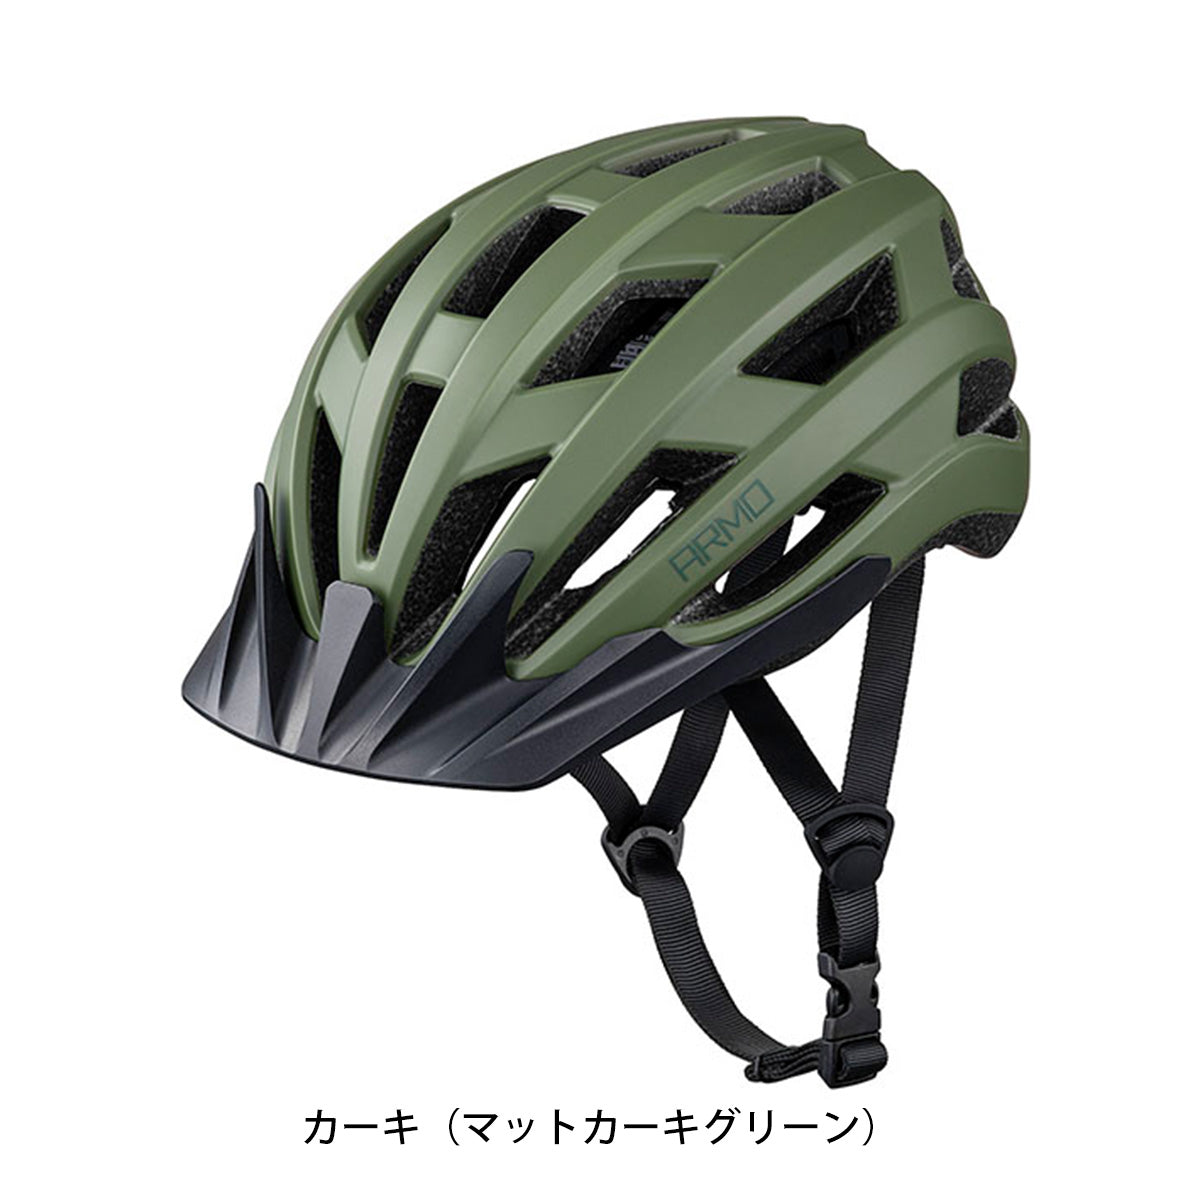 Dバイク ARMO 子供用ヘルメット SG基準 [ARMO Helmet] 2404hel